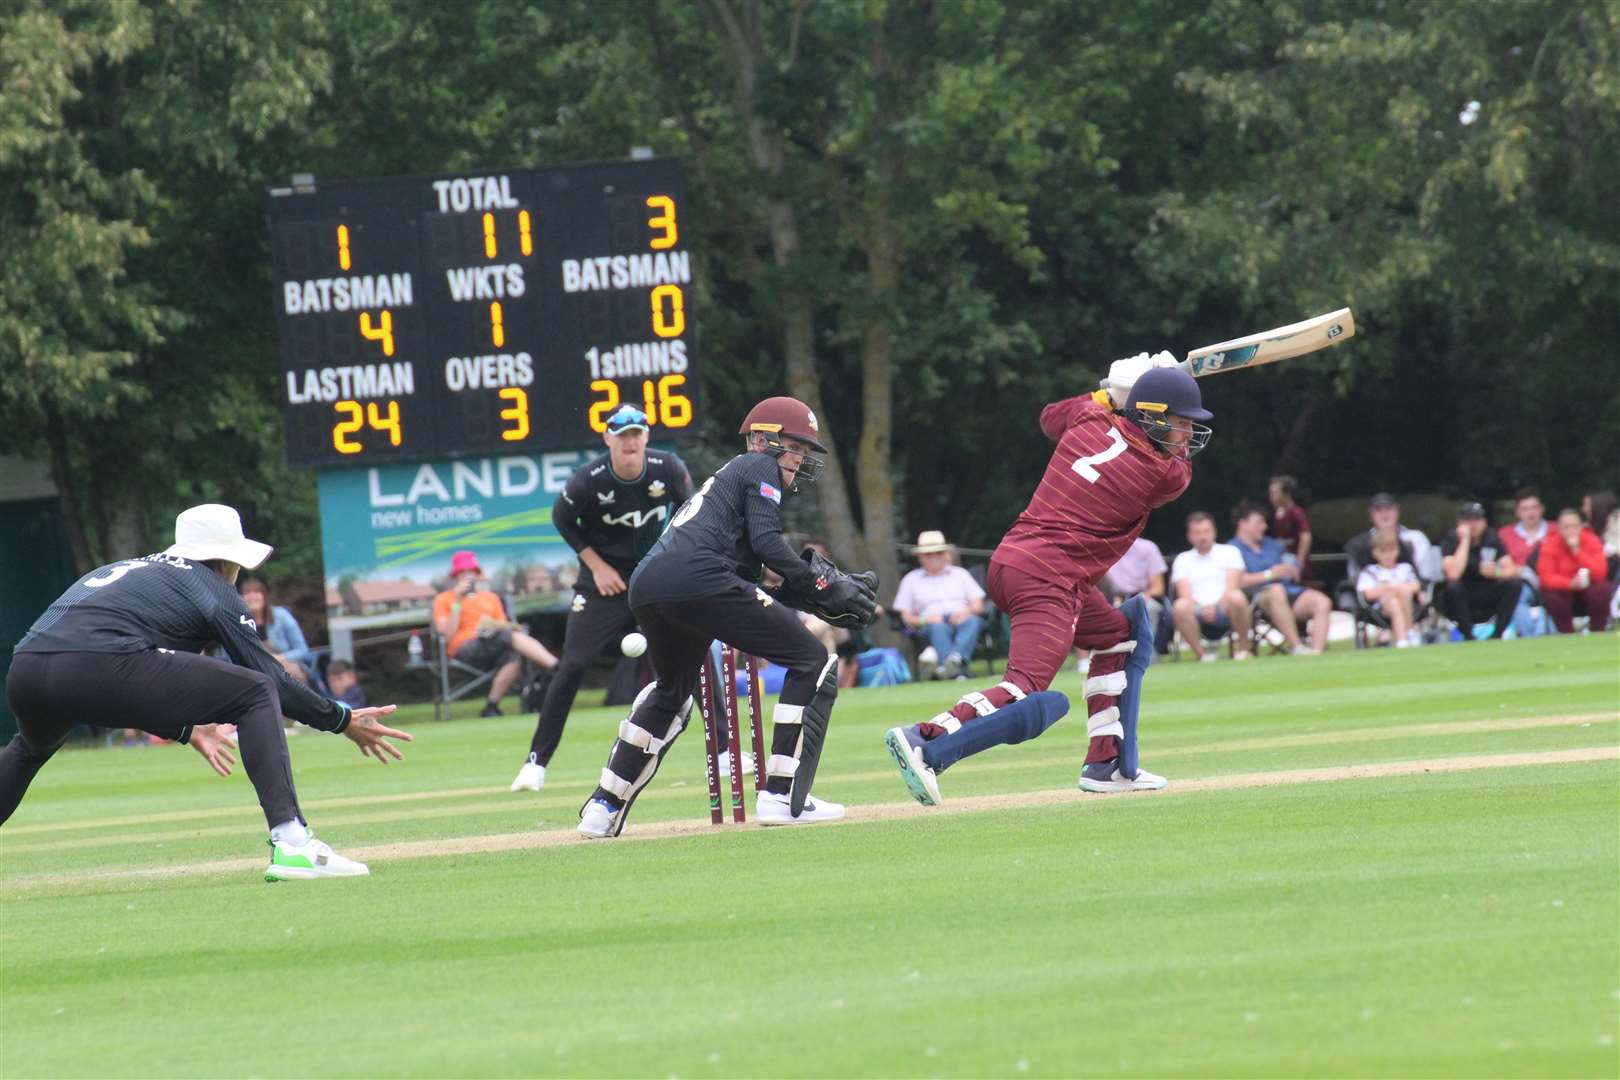 Suffolk’s Jack Beaumont pictured batting in this year’s NCCA Showcase fixture versus Surrey at Woolpit Picture: Nick Garnham